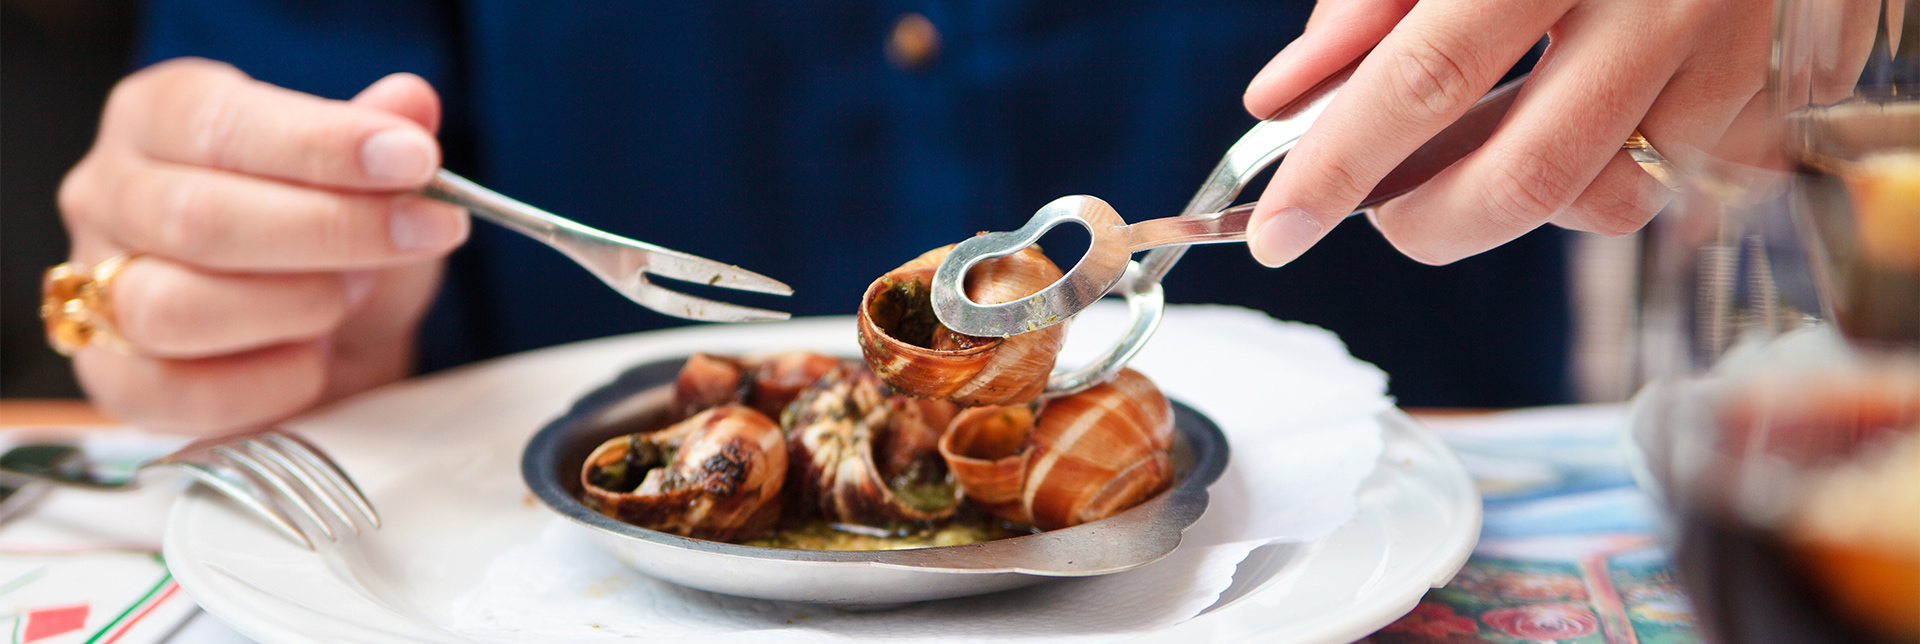 snails-as-sustainable-food-header.jpg